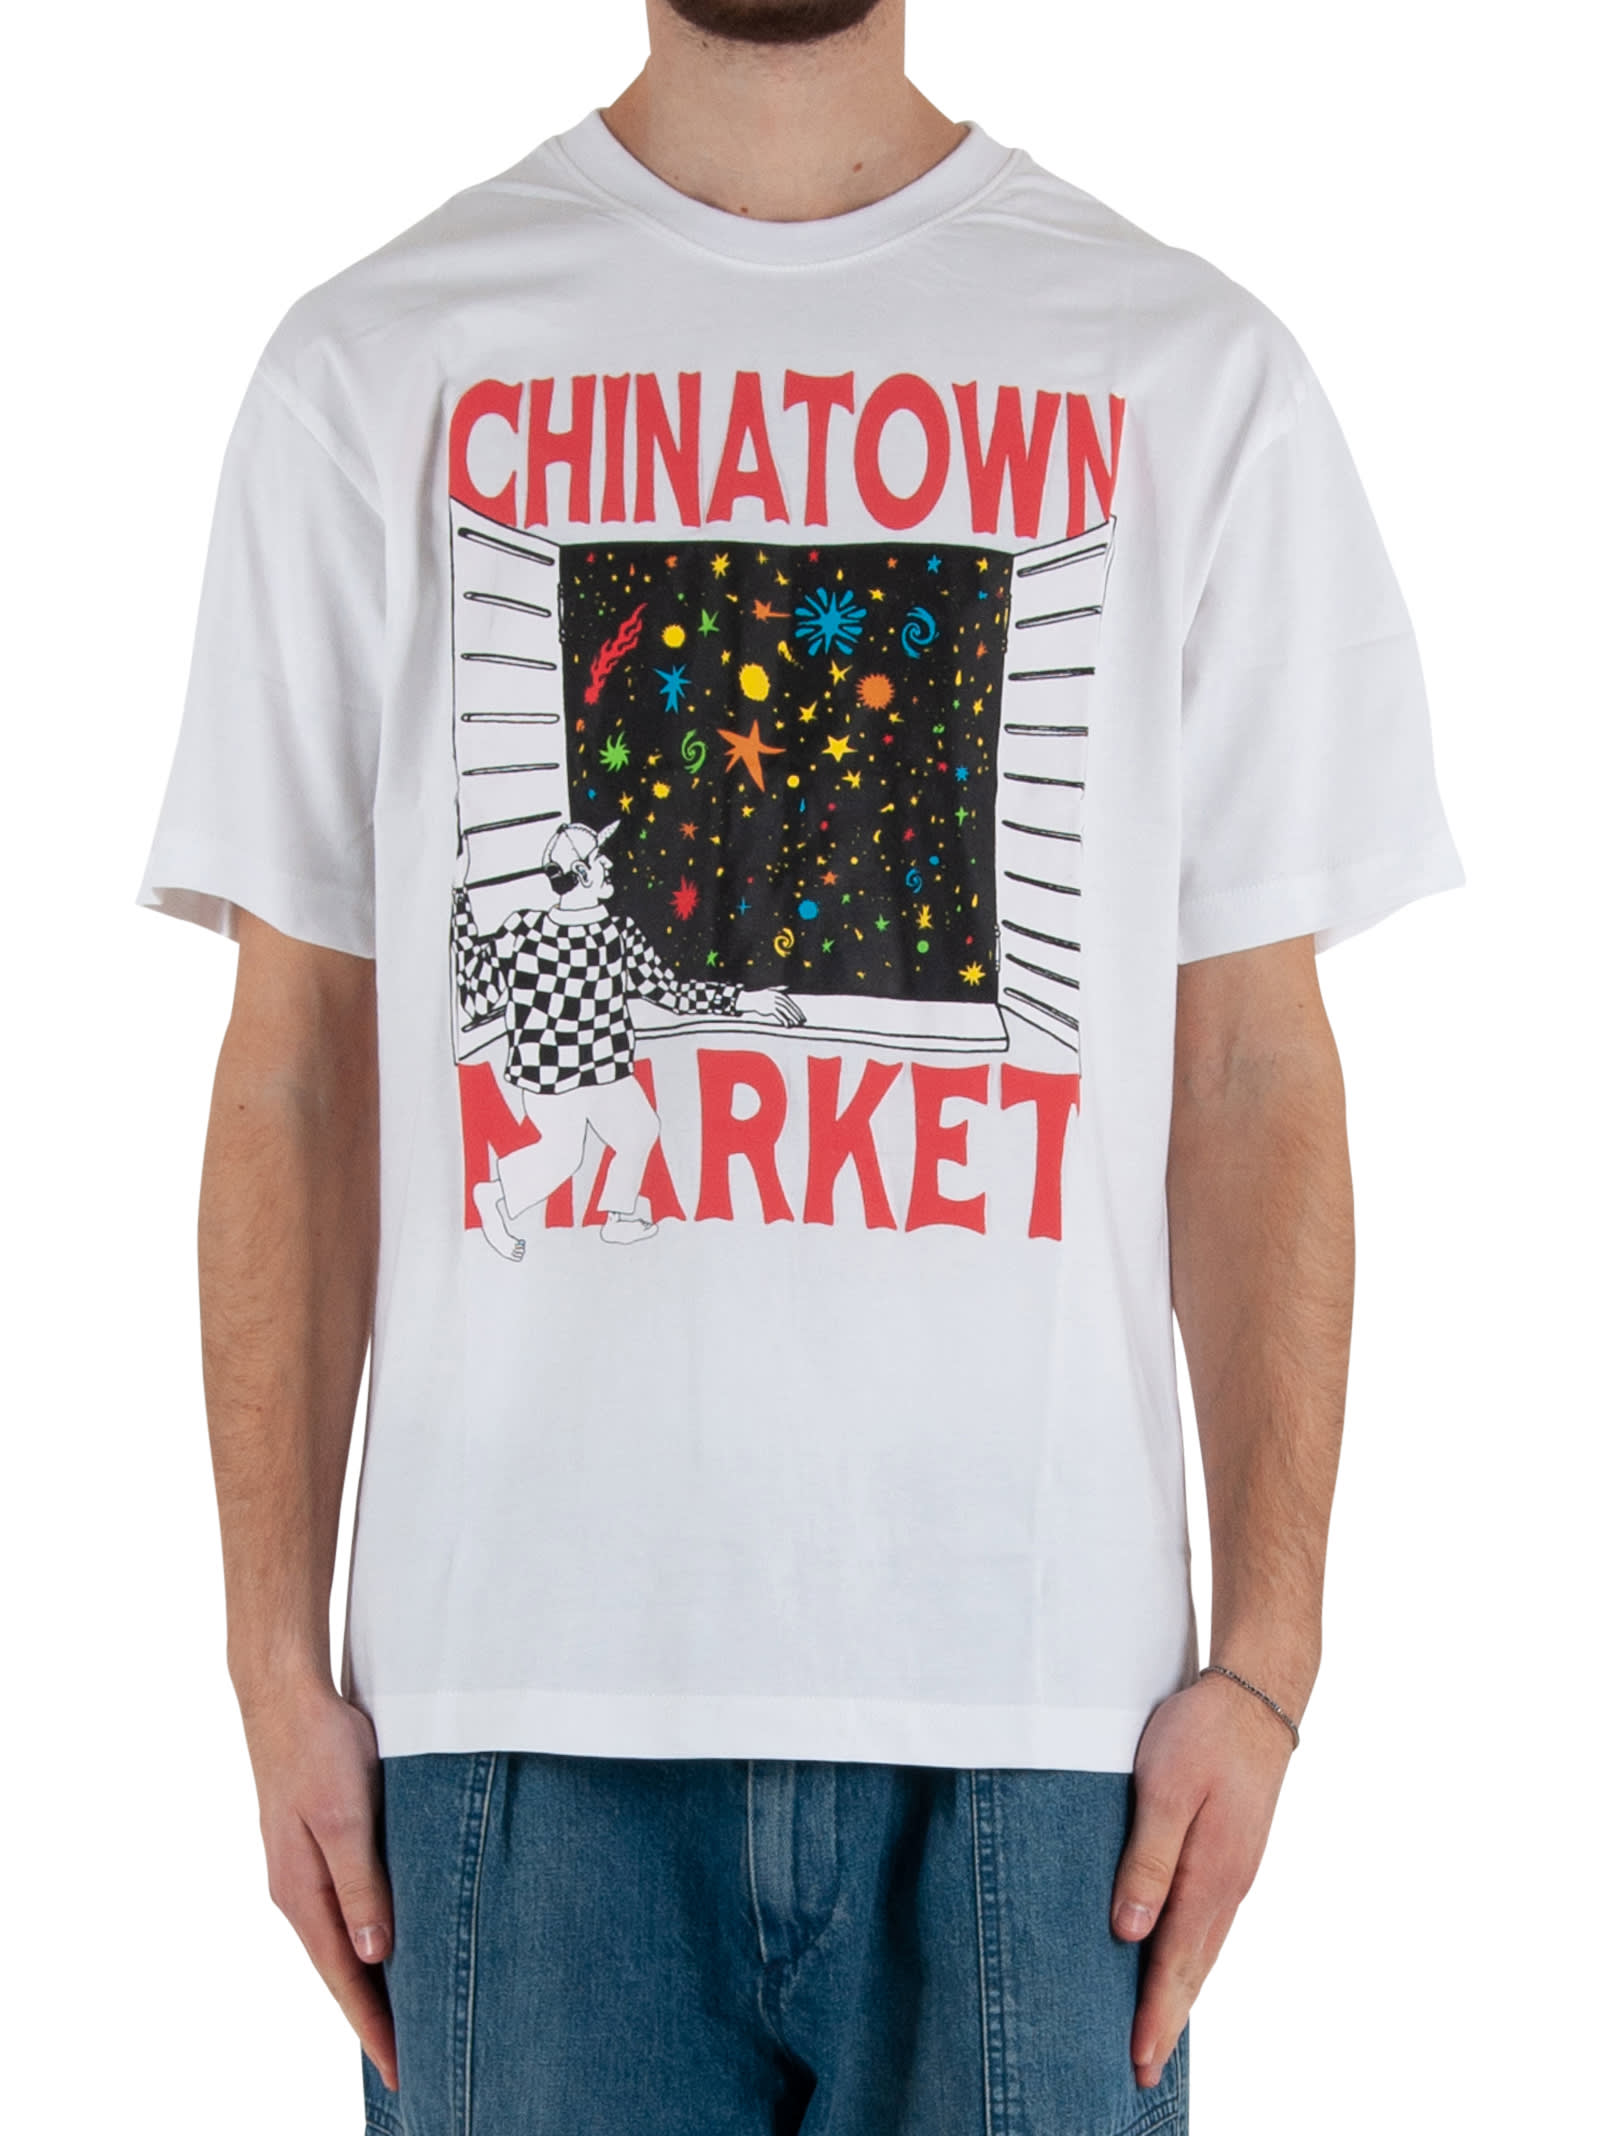 Chinatown Market Windows Tee